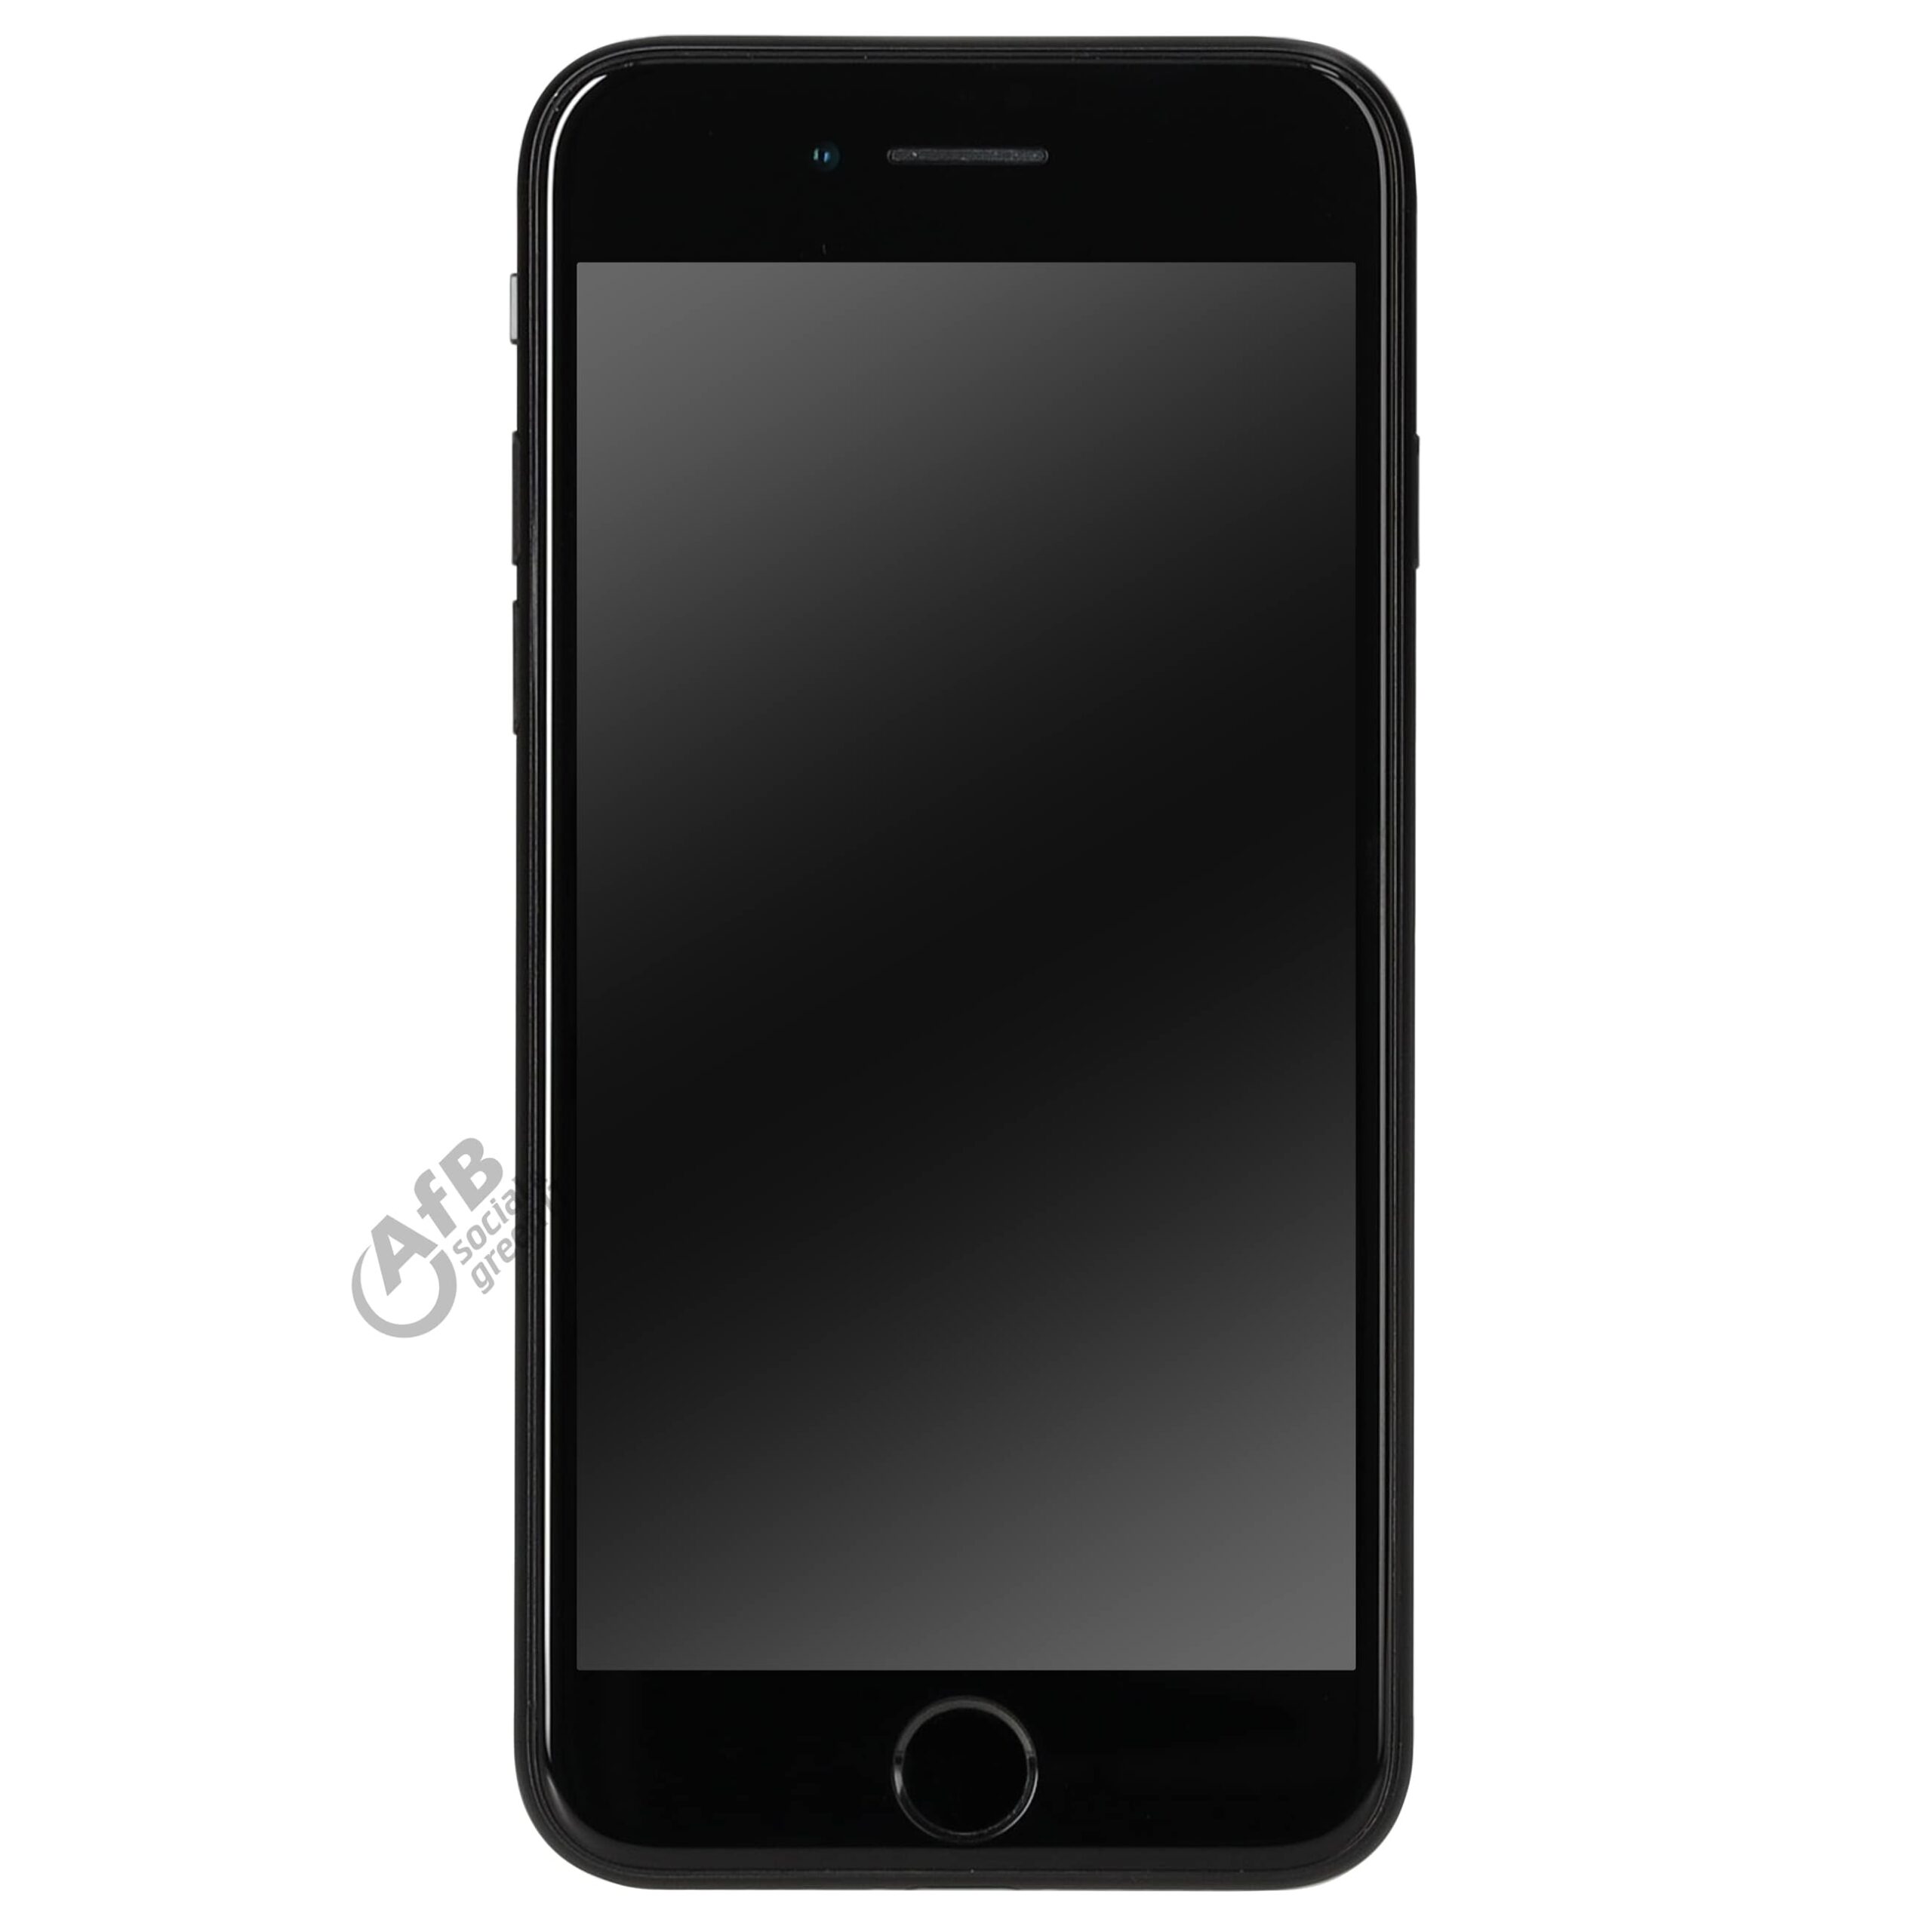 Apple iPhone SE (2020)Wie neu – AfB-refurbished